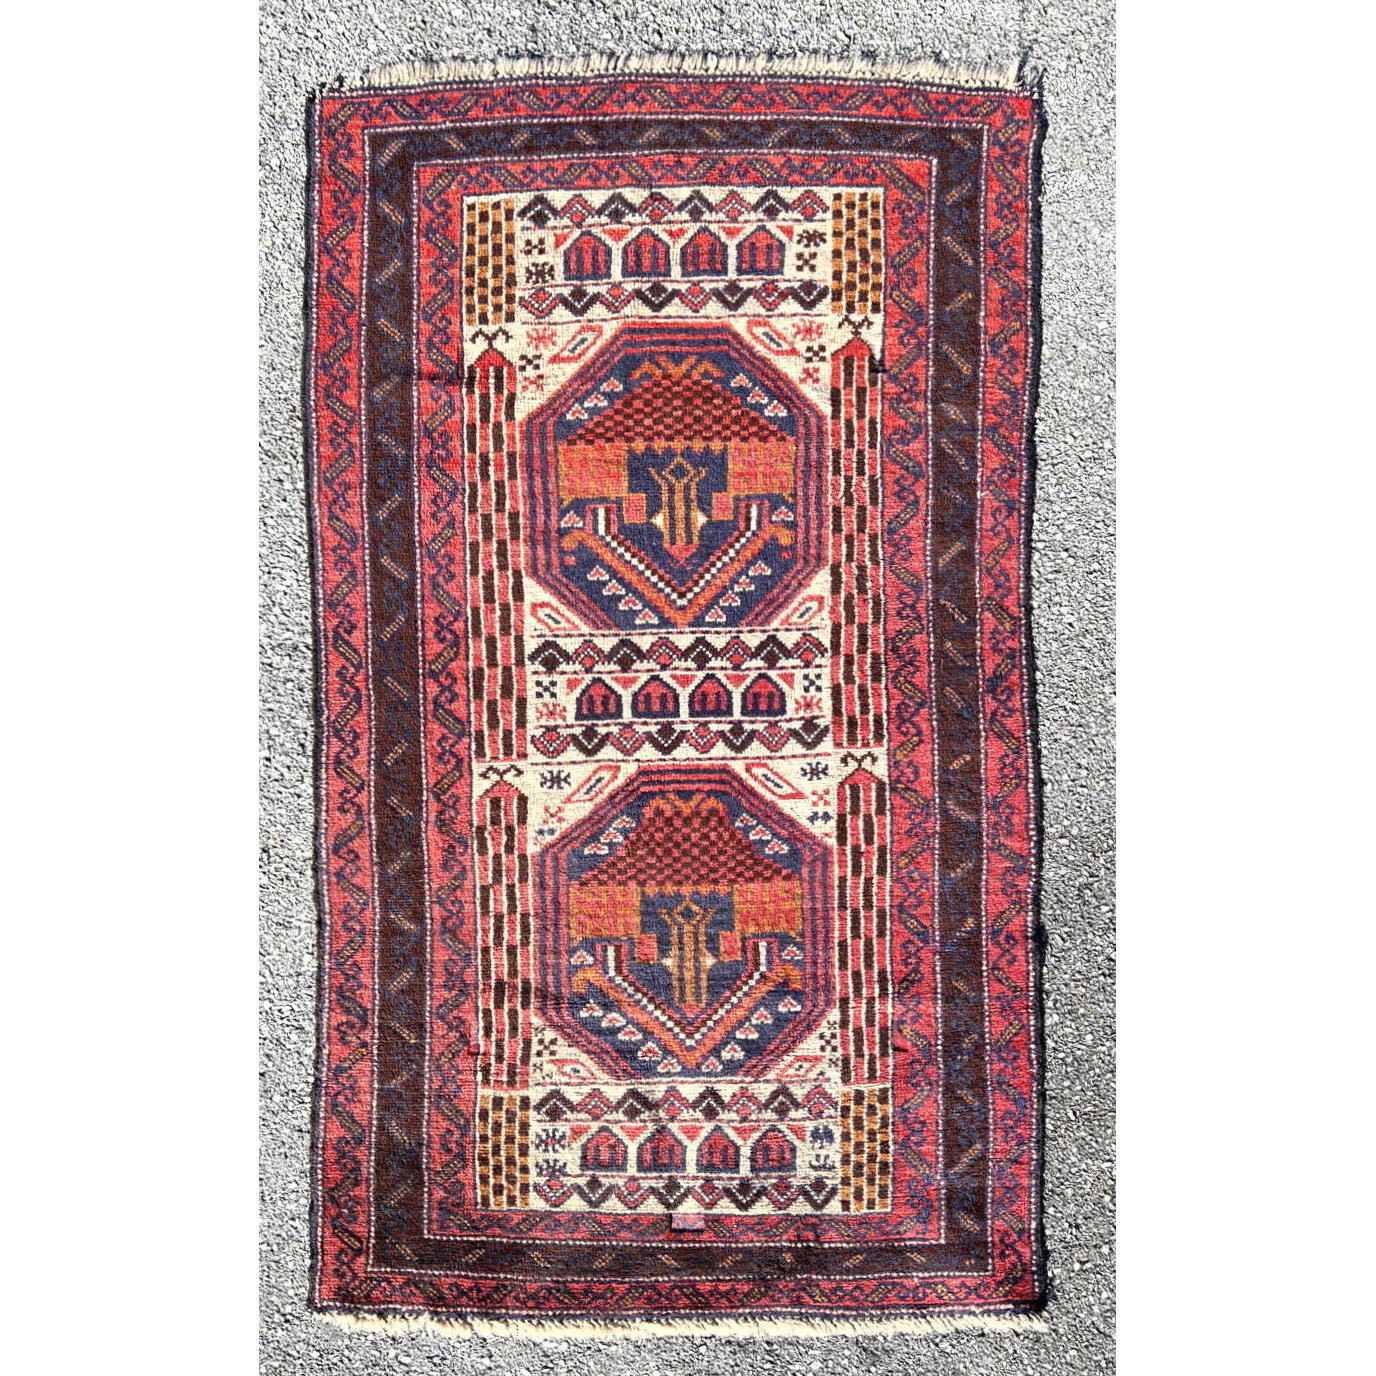 6'4 x 3'6 Handmade Oriental Carpet